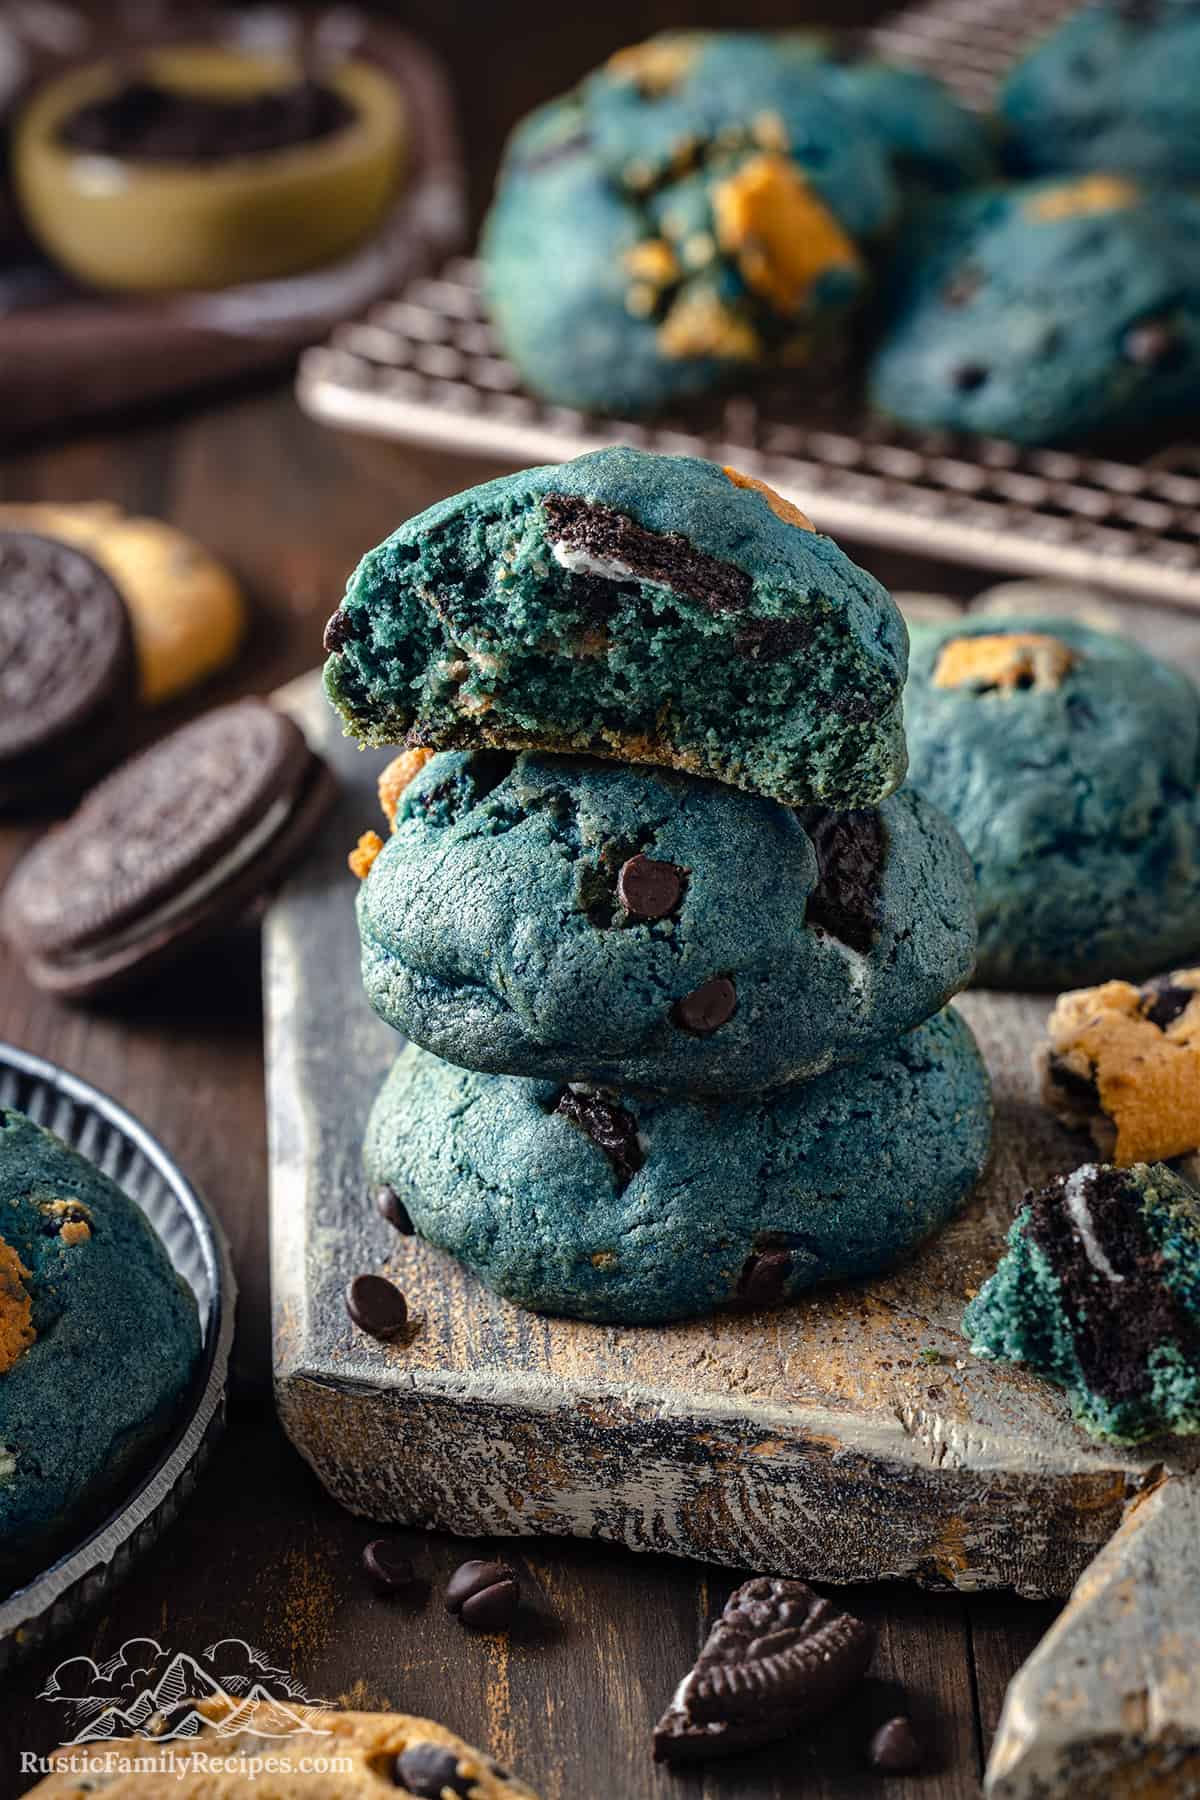 A stack of three cookie monster cookies, one broken in half